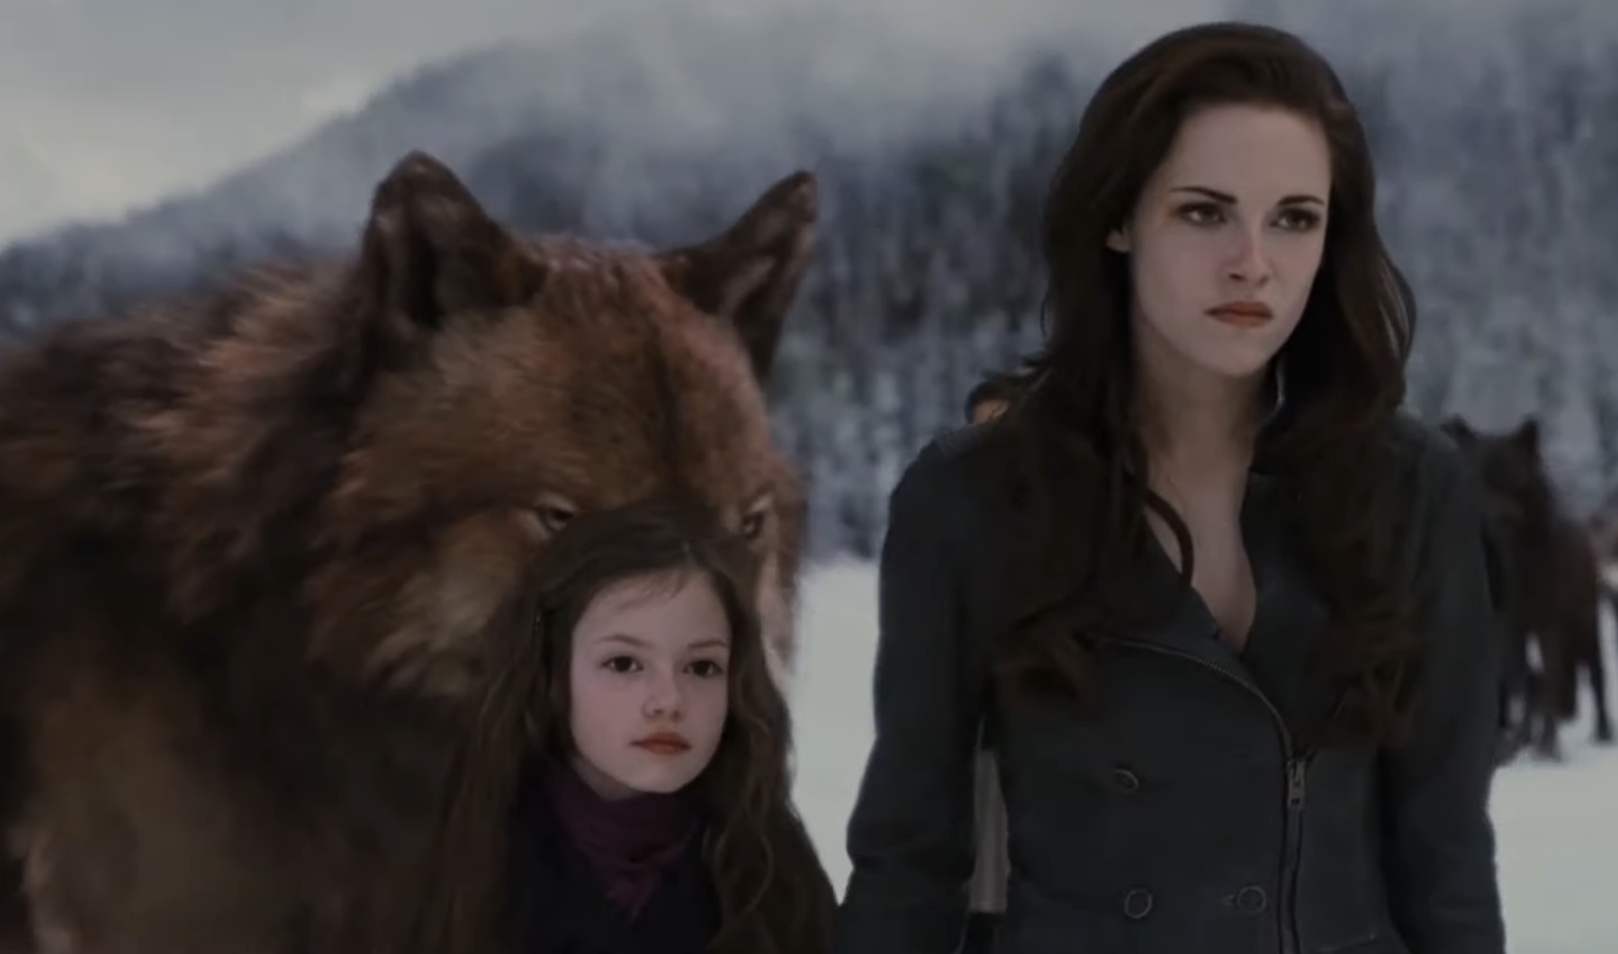 MacKenzie standing next to Kristen Stewart in the woods with wolves behind them